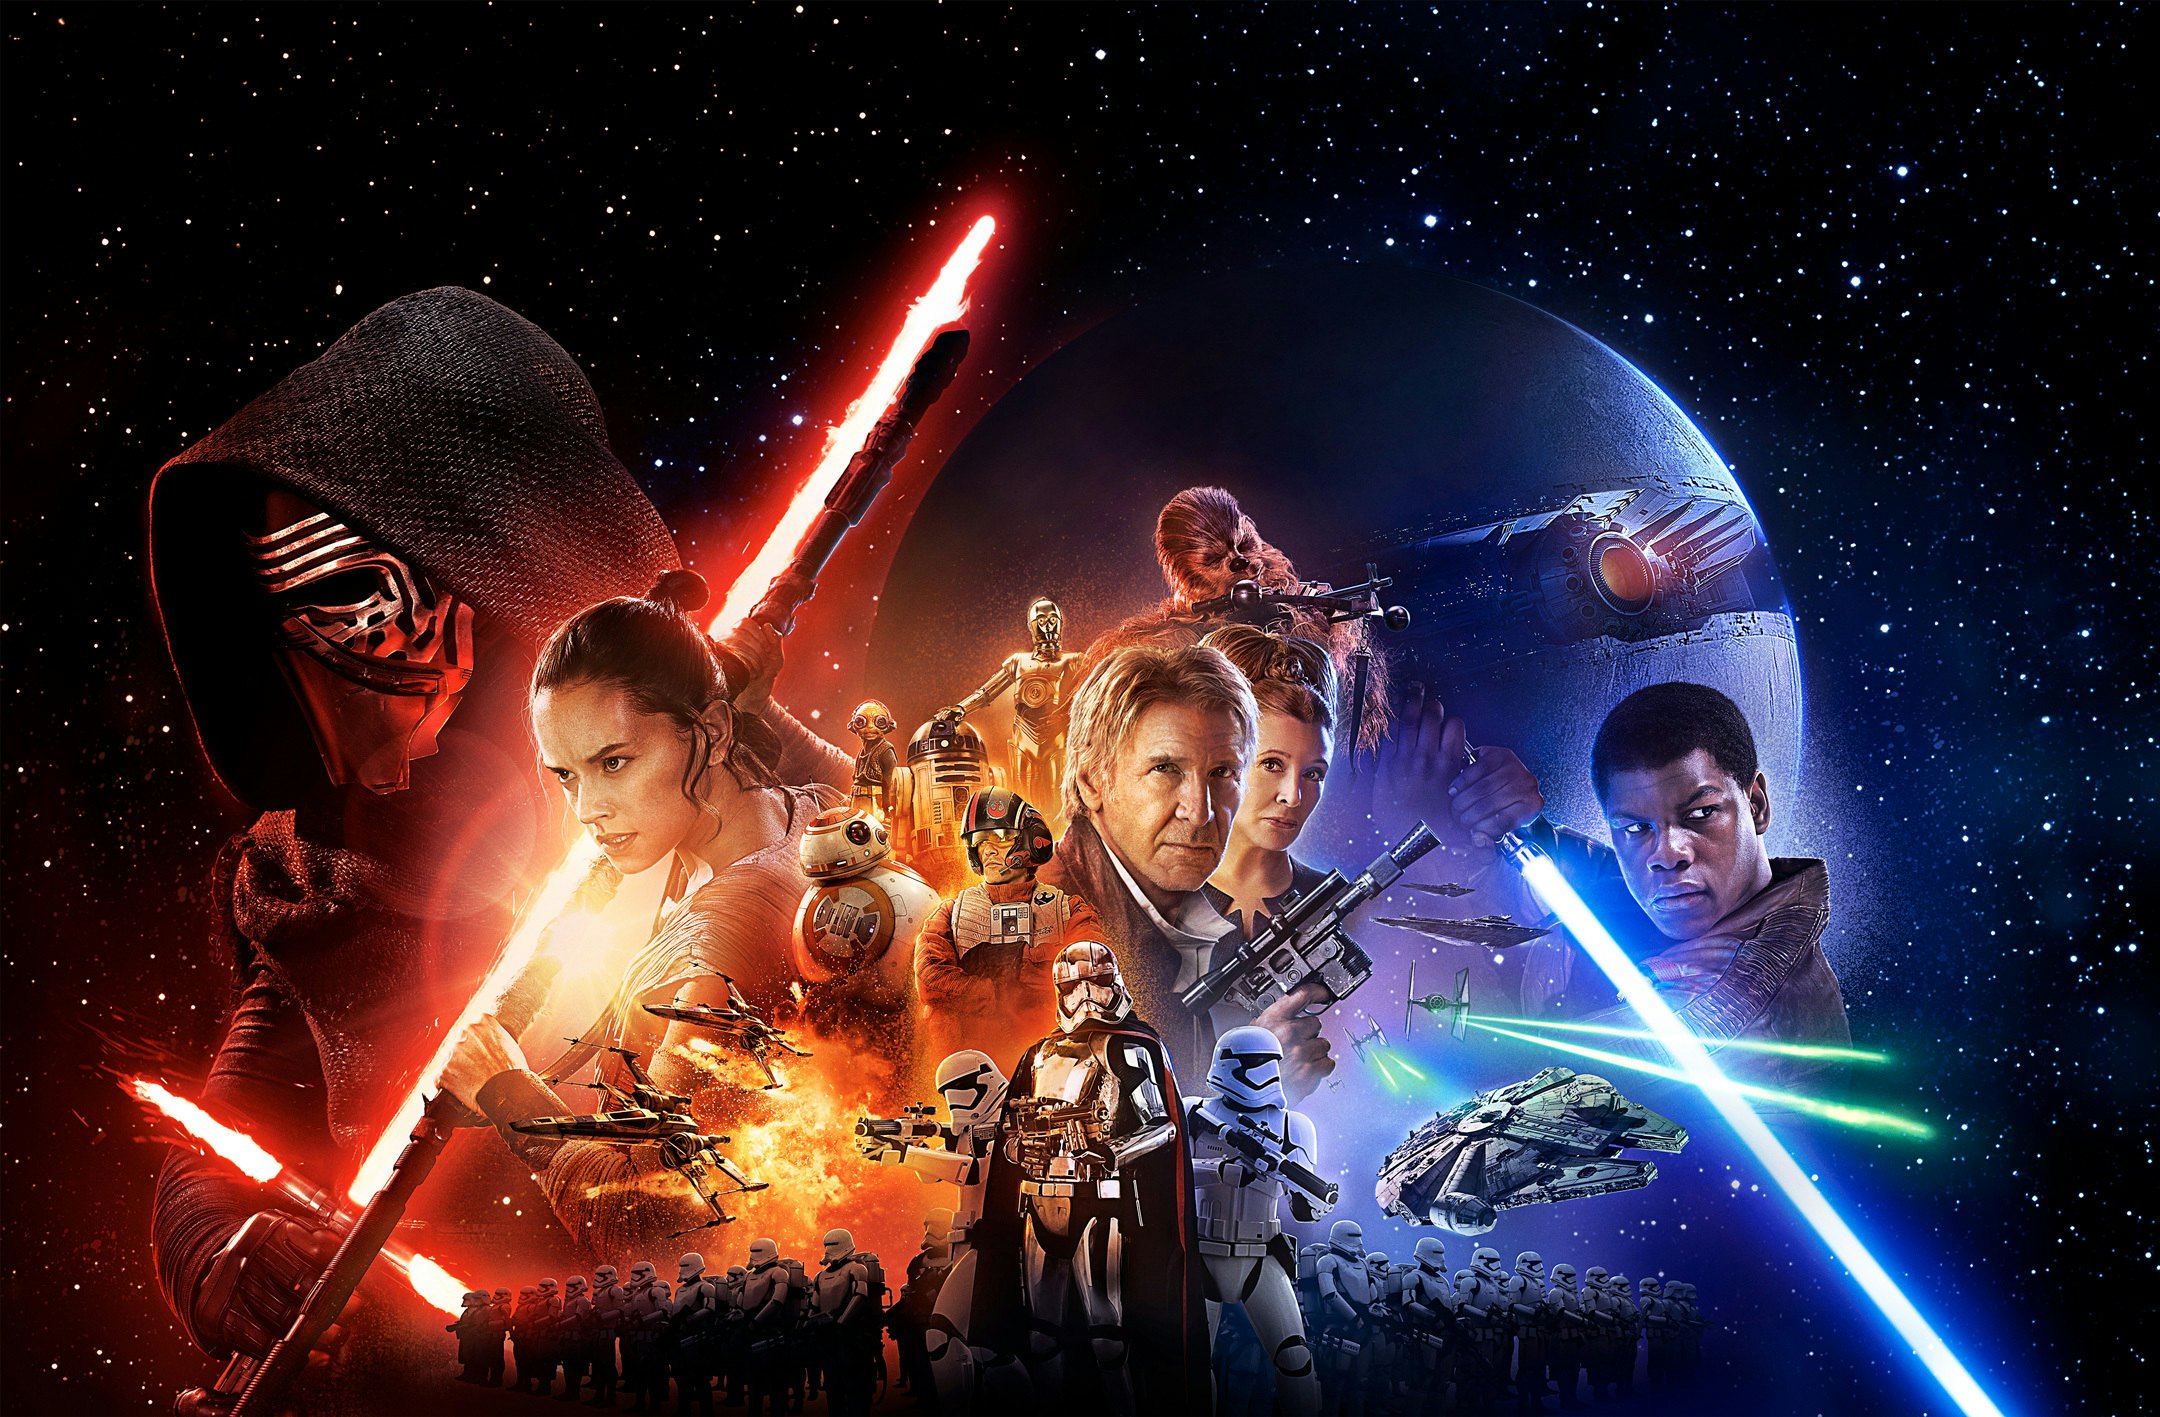 star wars the force awakens movie dae